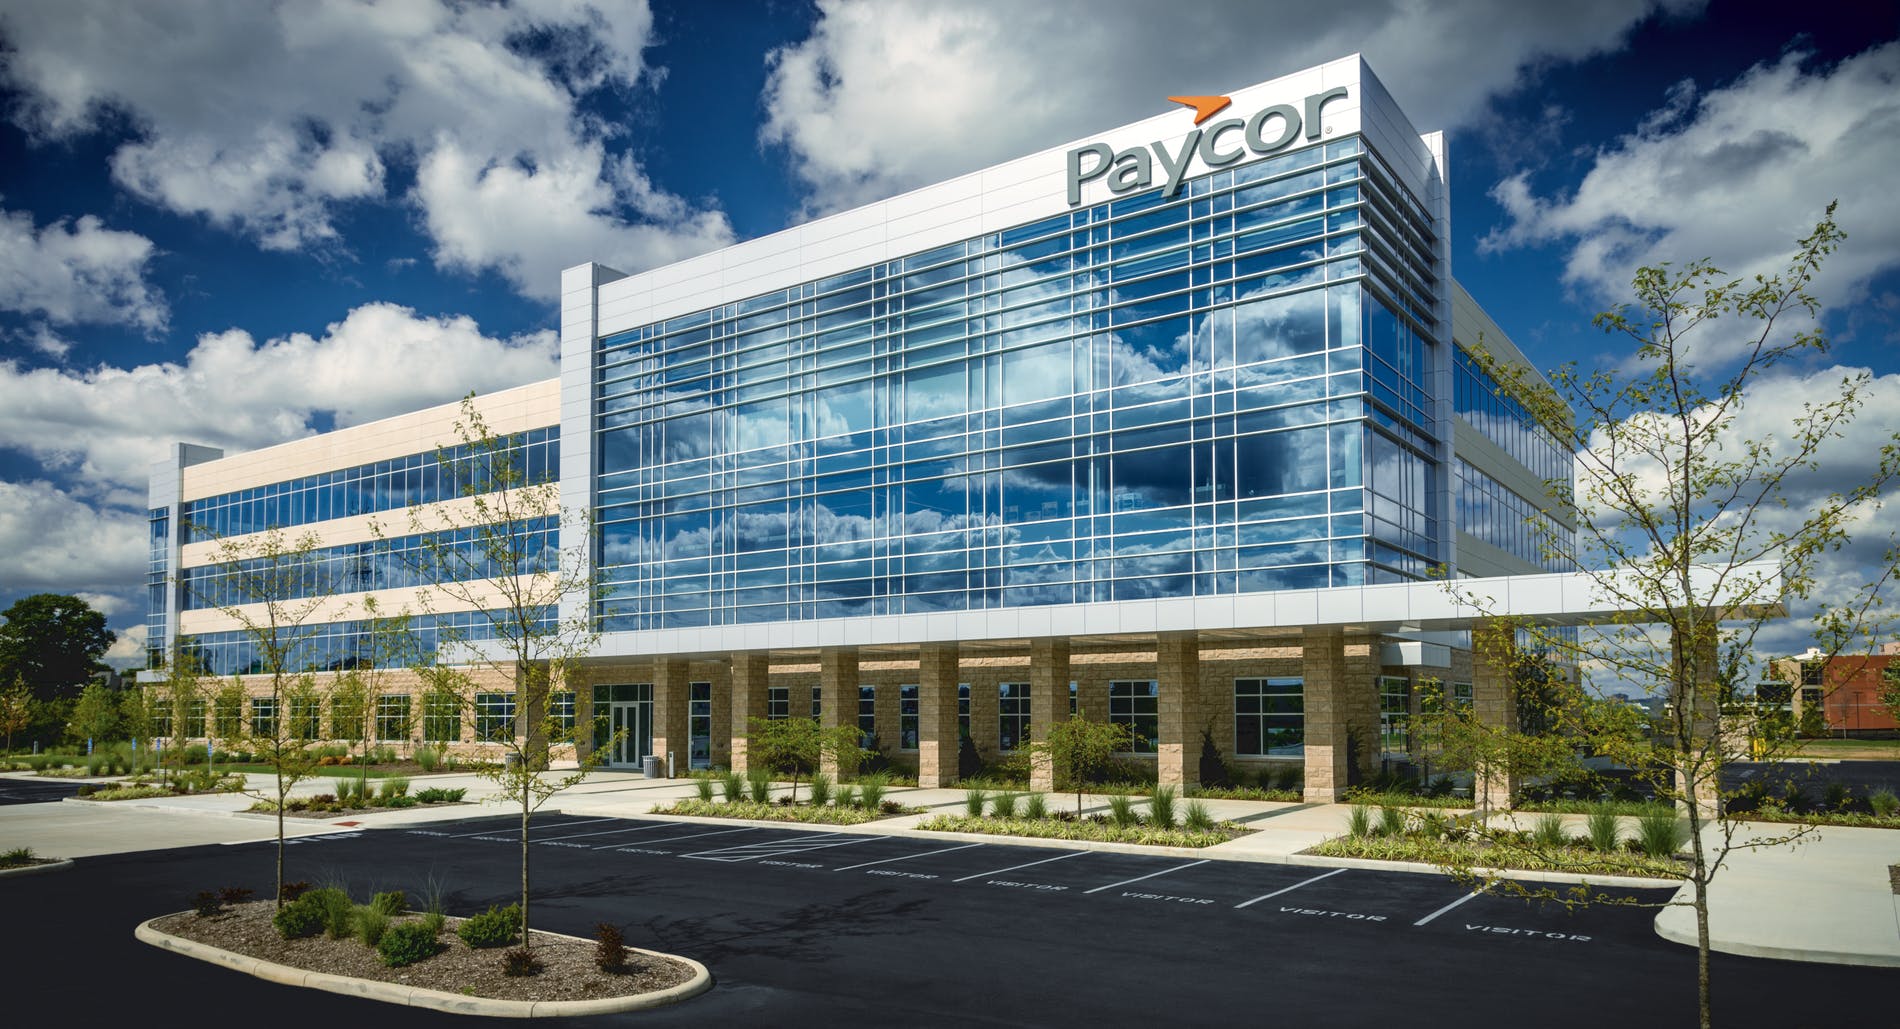 Paycor joins Delaget's Vendor Marketplace